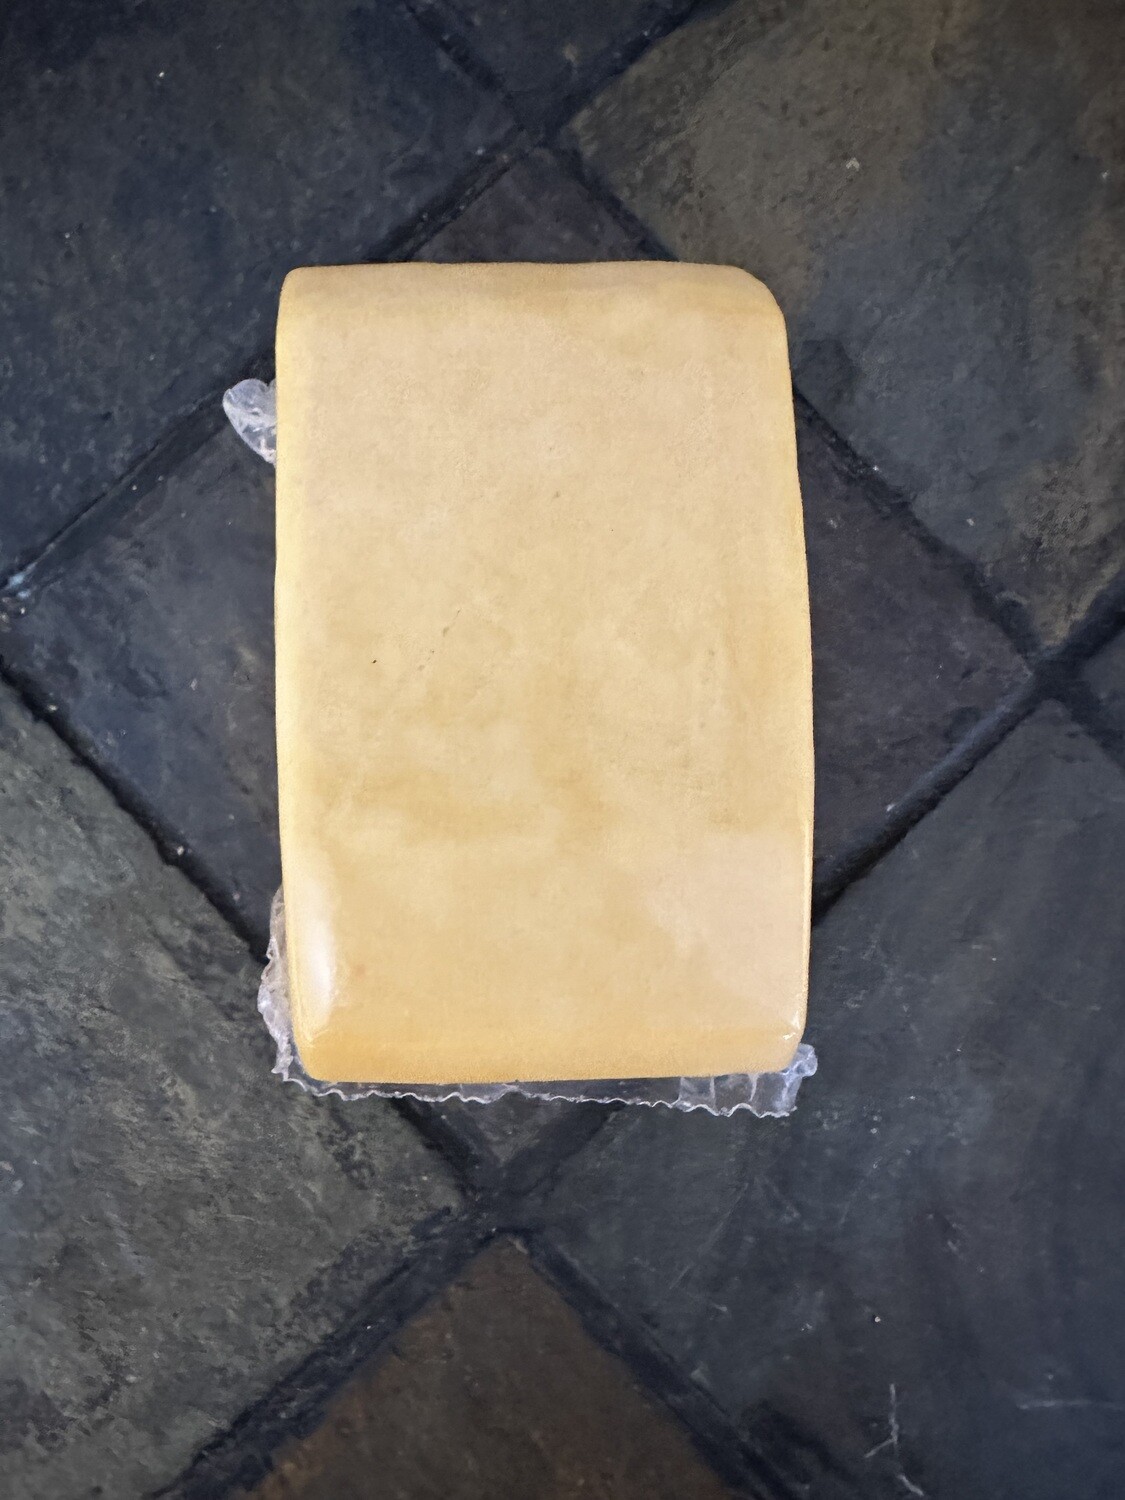 Cheese - Edam, 1 lb.